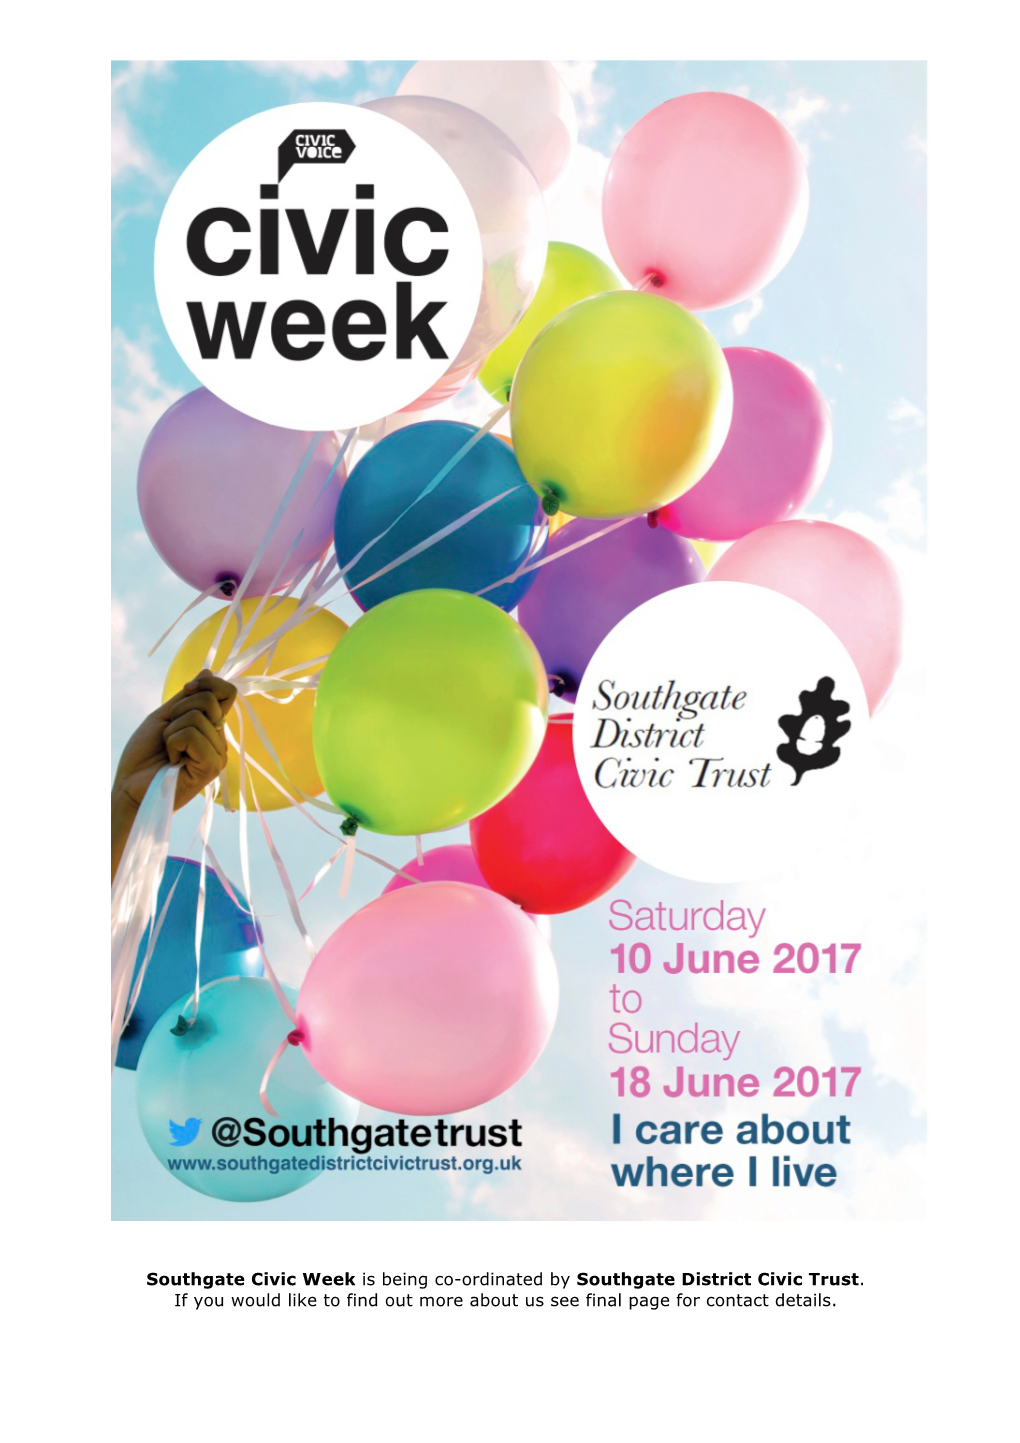 Southgate District Civic Trust